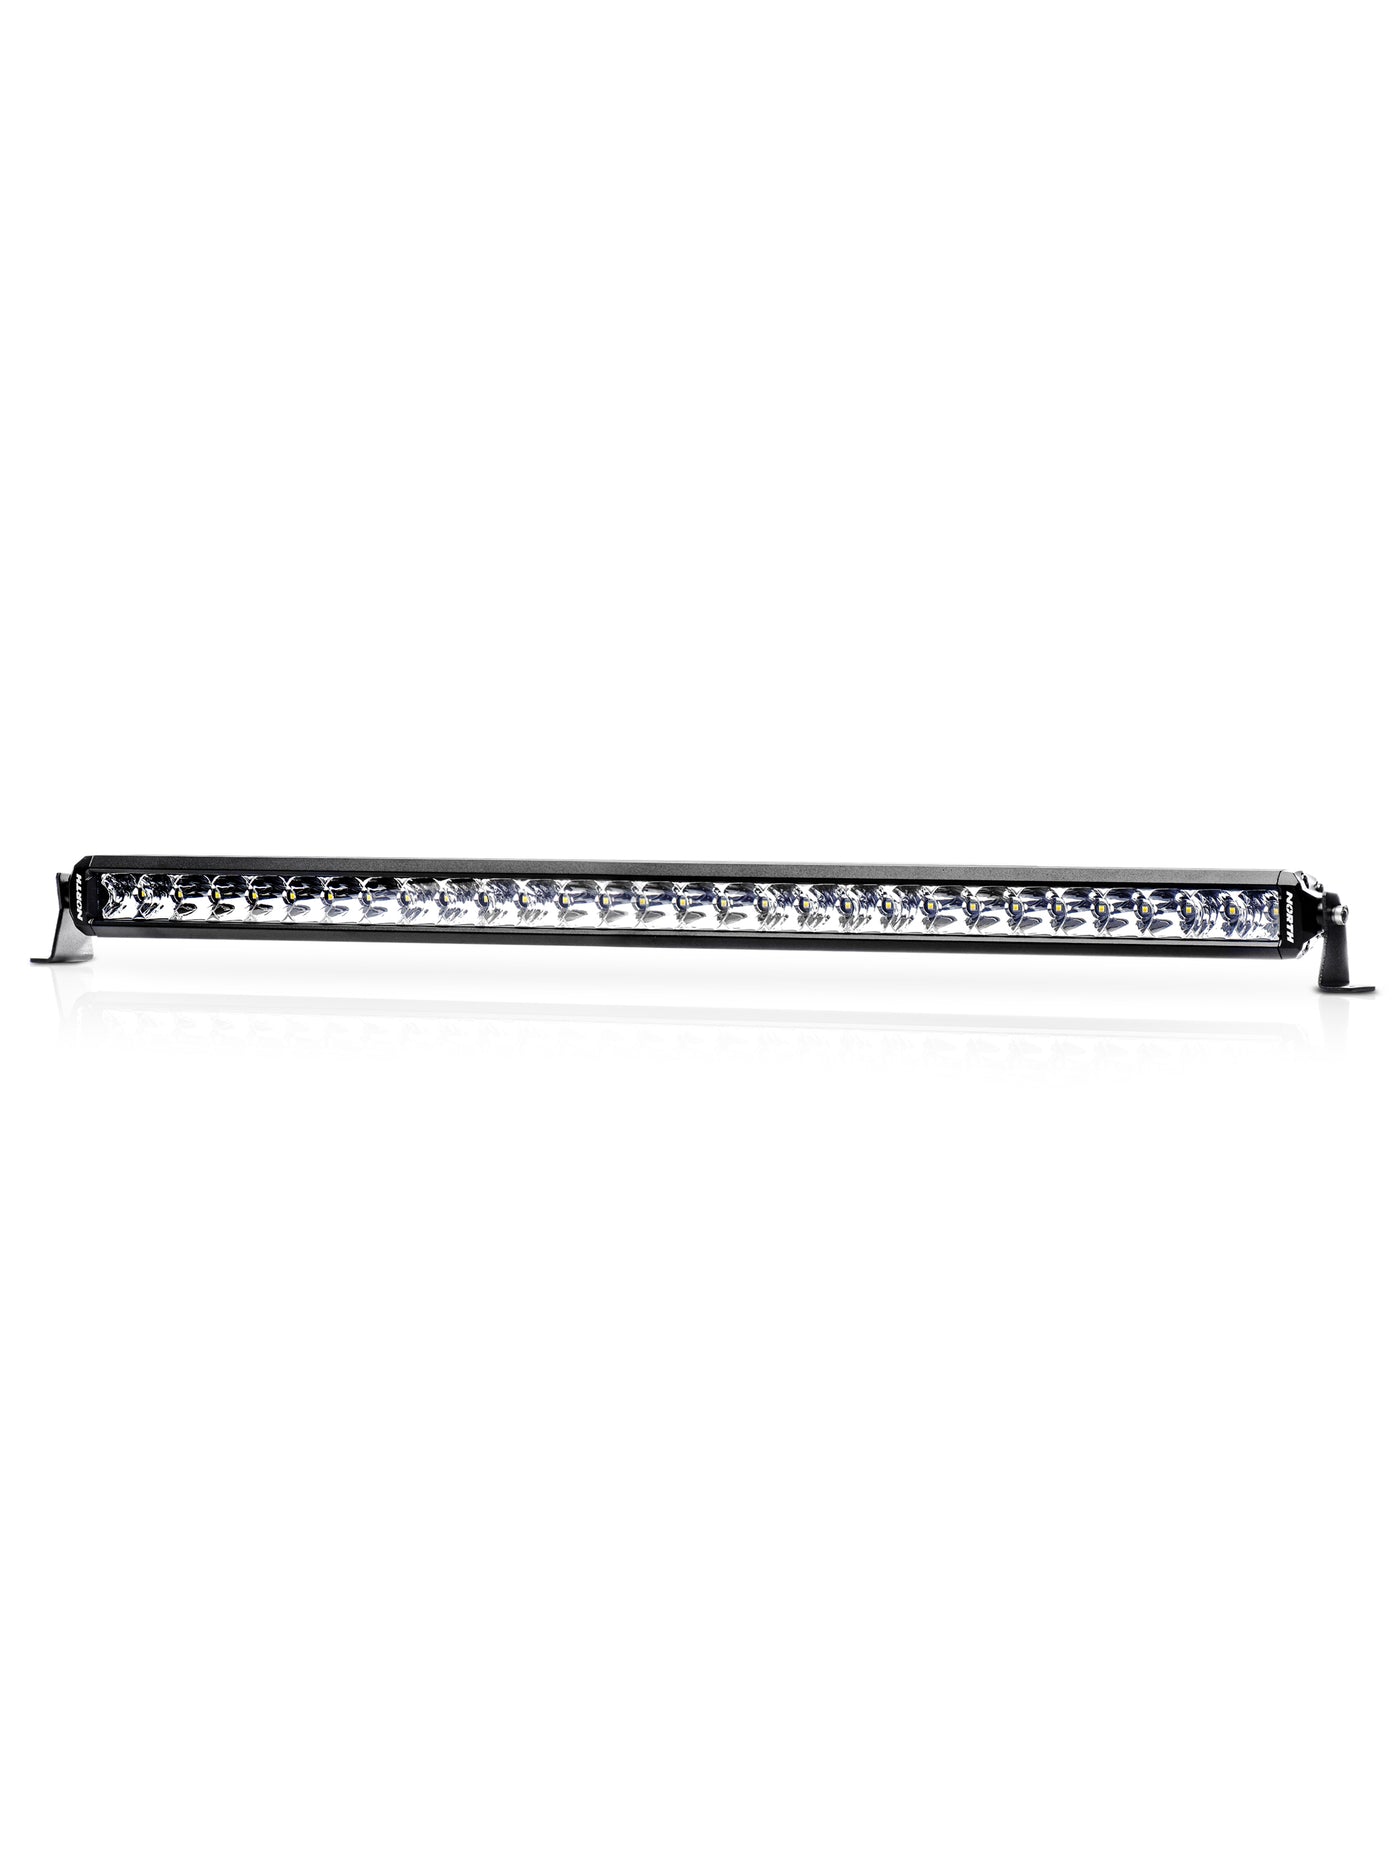 30" Single Row LED Light Bar - Flood/Spot Combo -North Lights